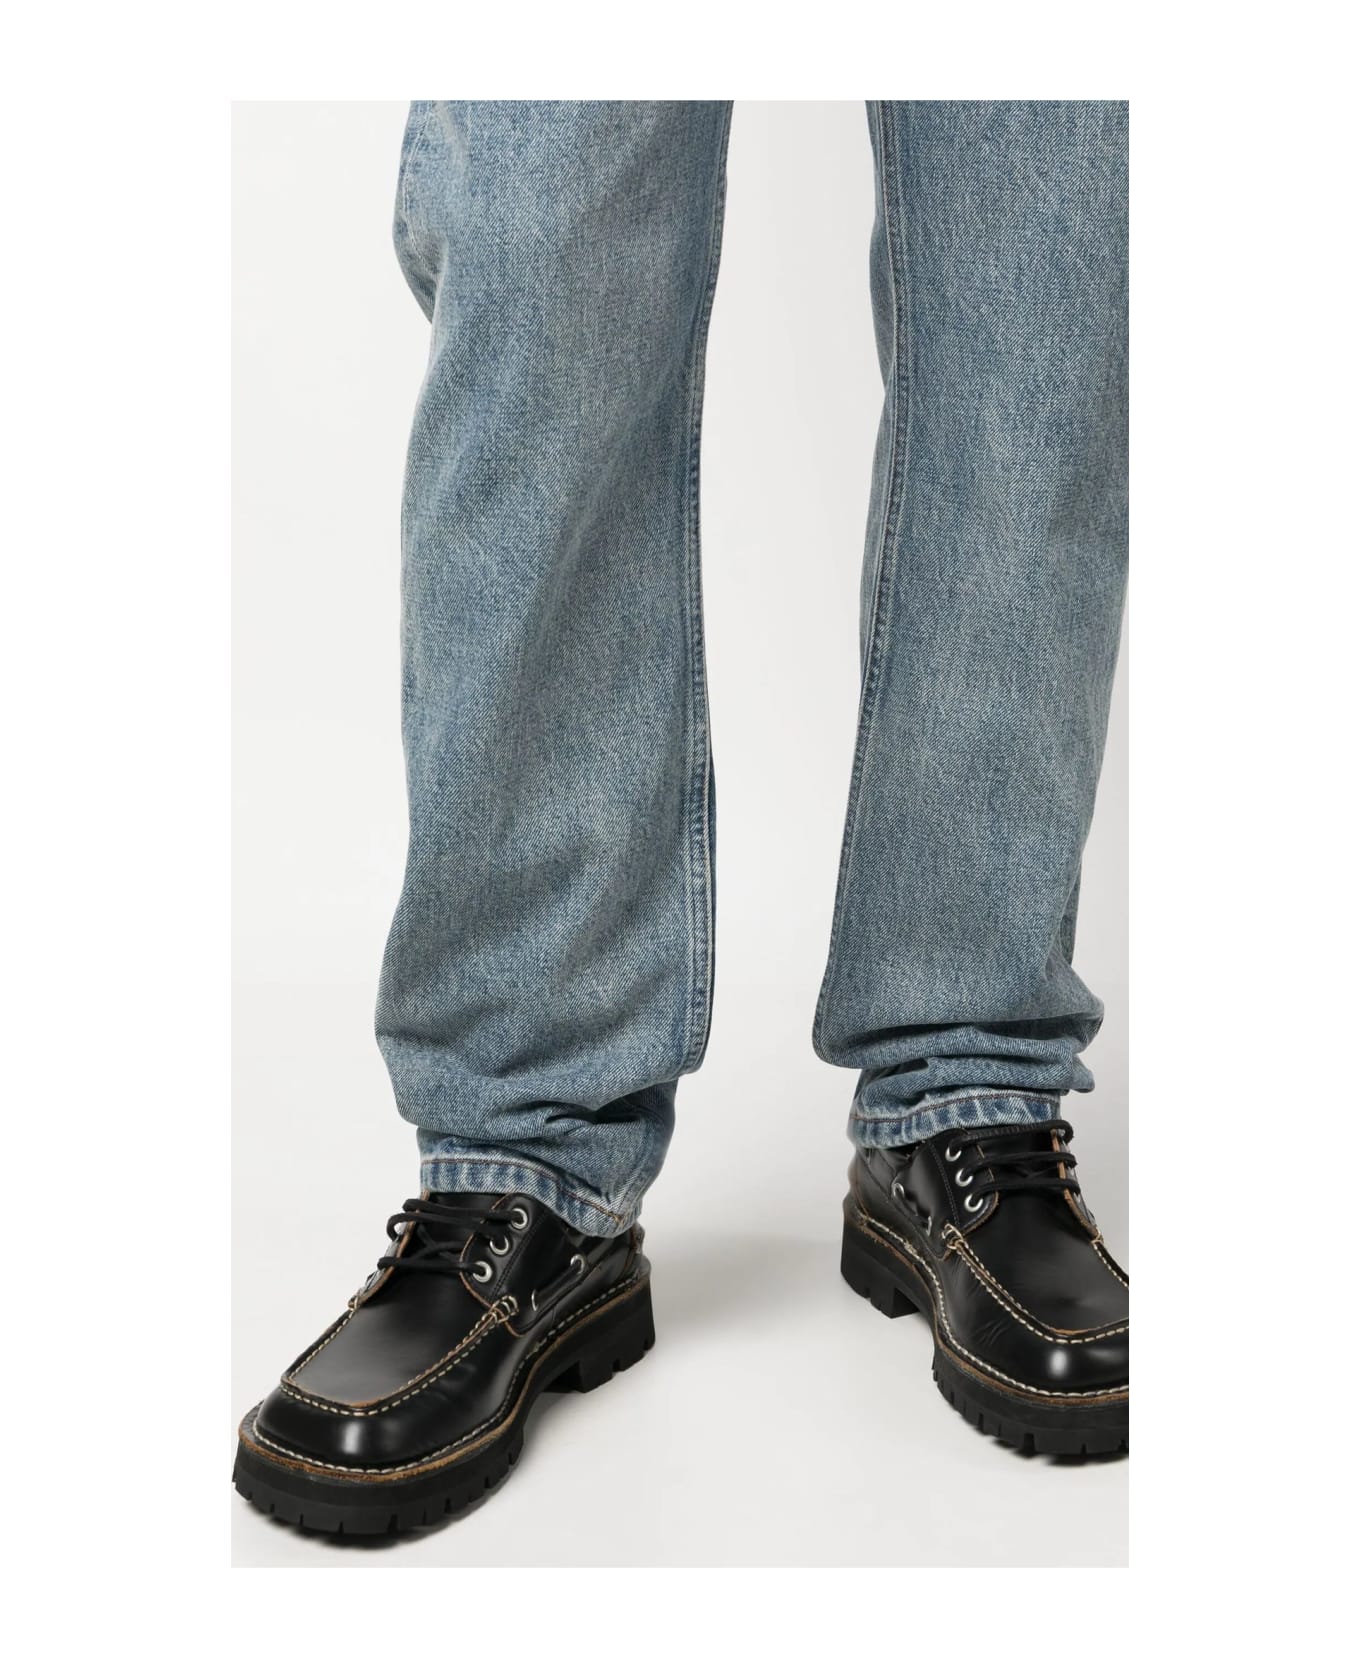 A.P.C. Cotton Denim Jeans - Blu デニム